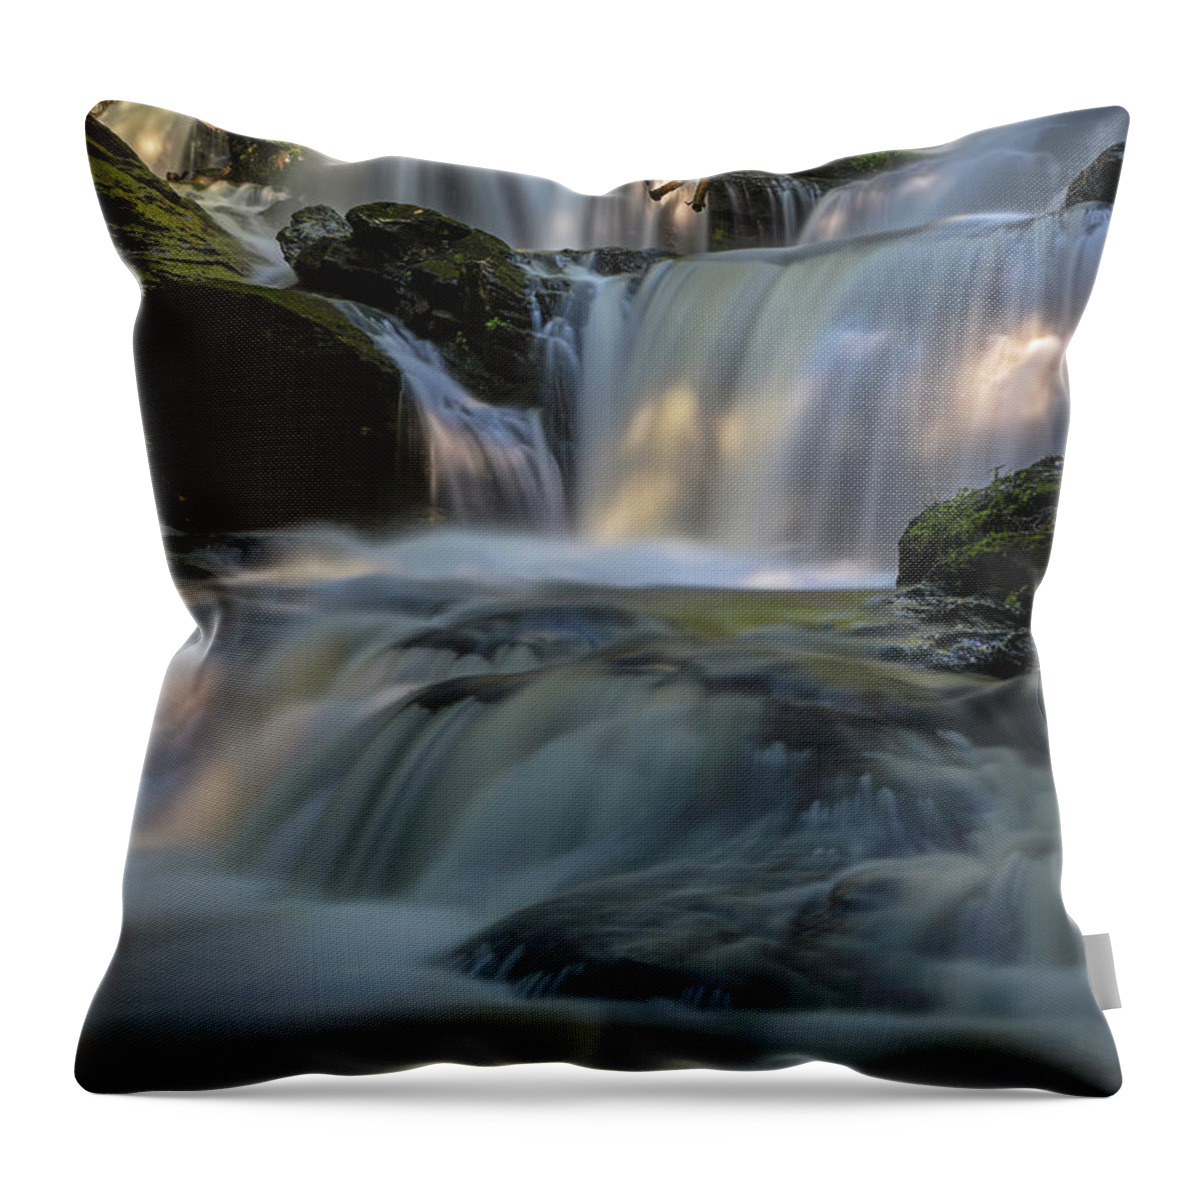 Garwin Fall Throw Pillow featuring the photograph Garwin Falls by Juergen Roth